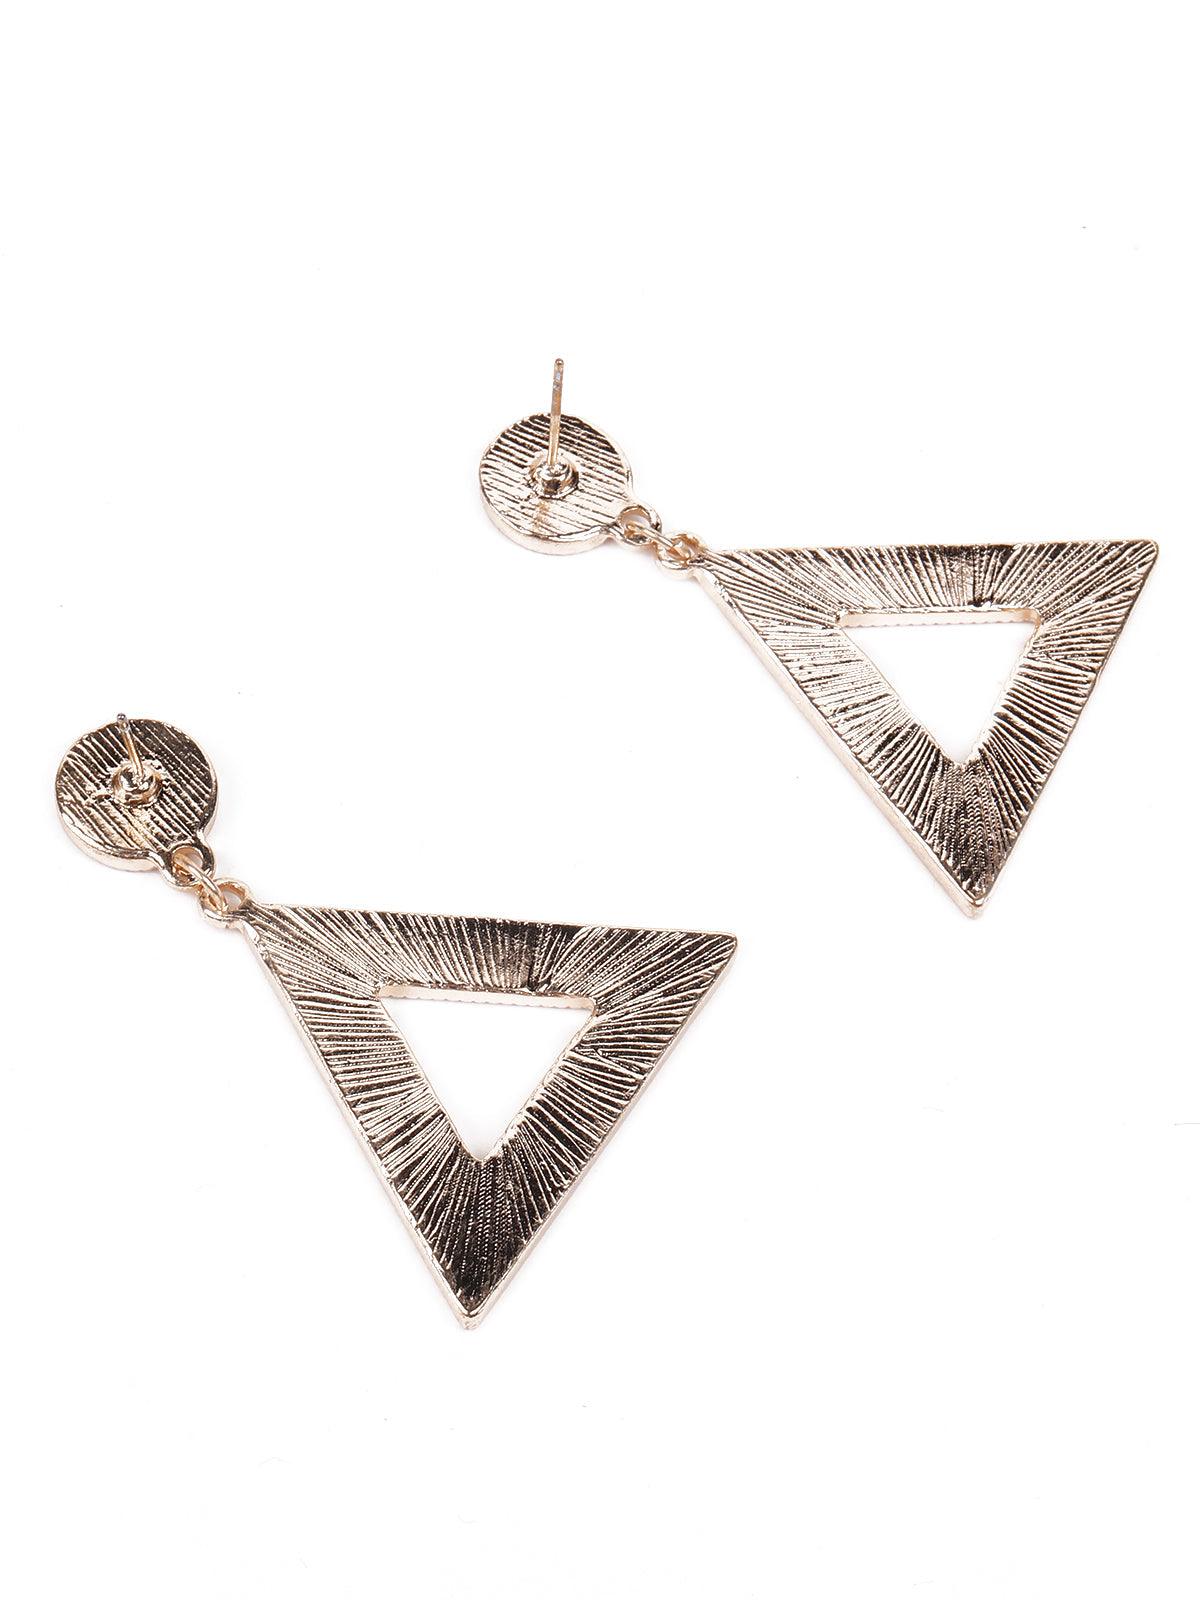 Triangular golden statement earrings - Odette